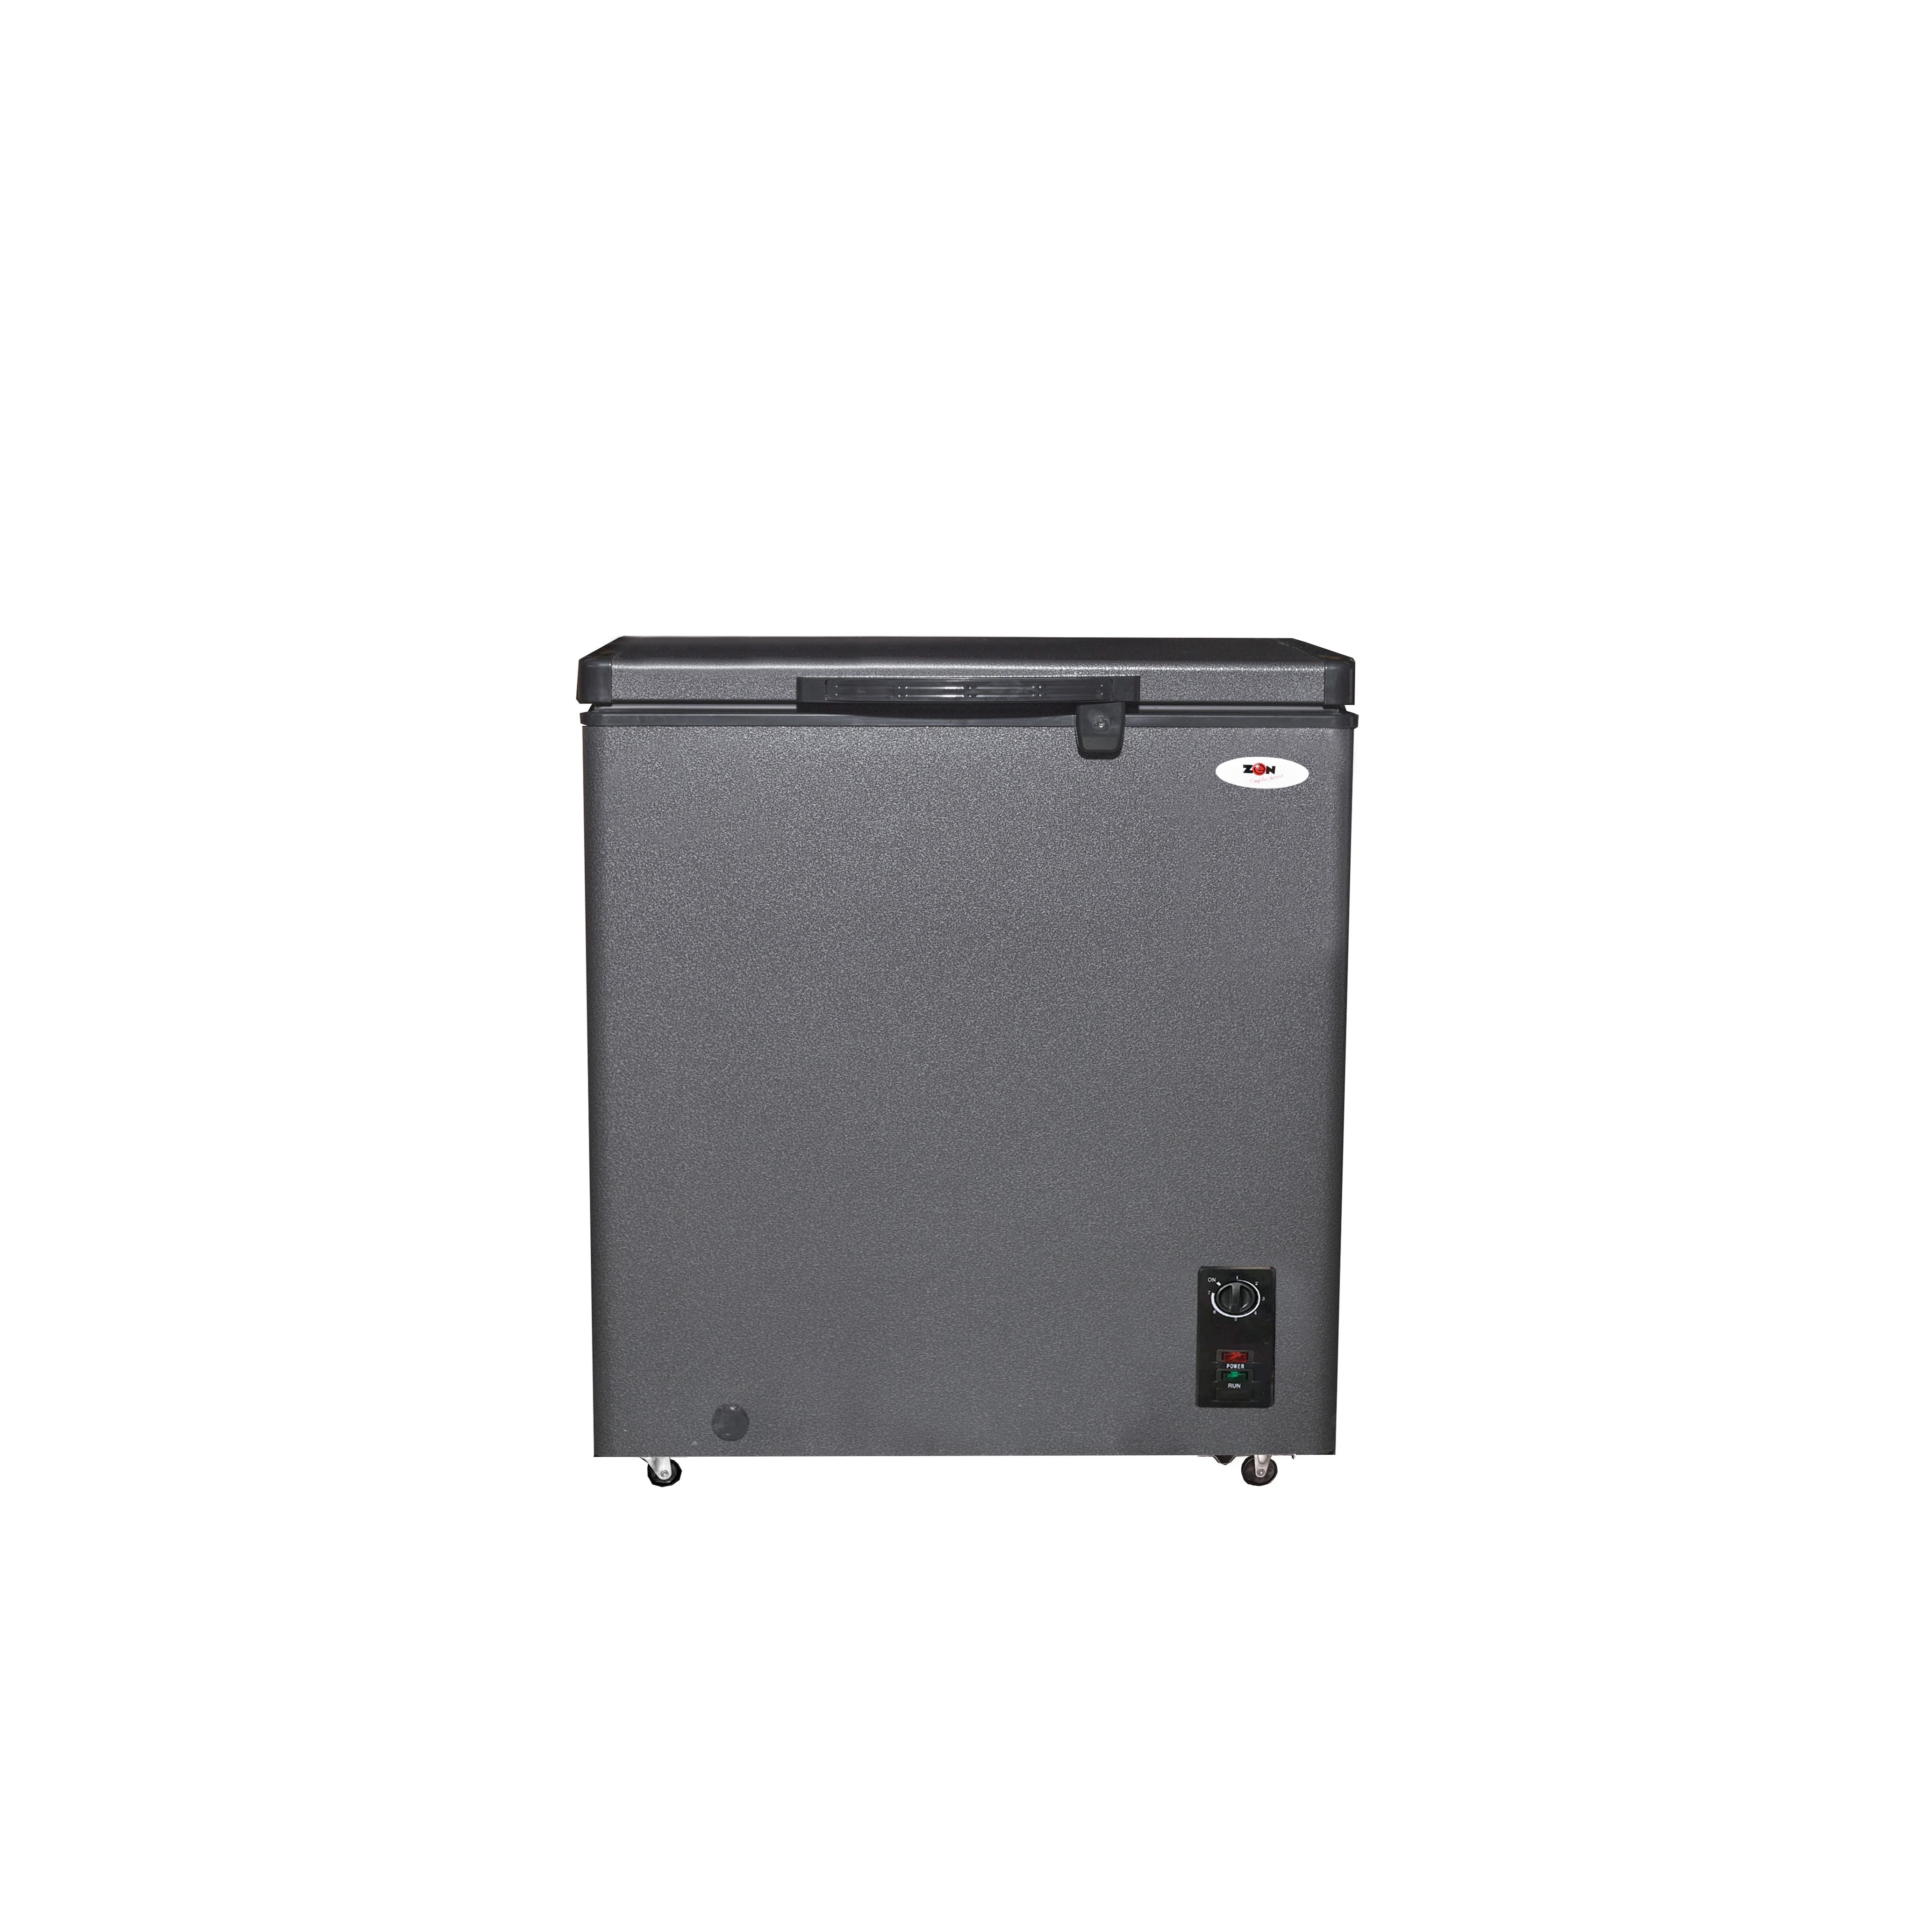 Zen Chest freezer 152Ltr - ZCFG152 | Home Appliance & Electronics | Halabh.com